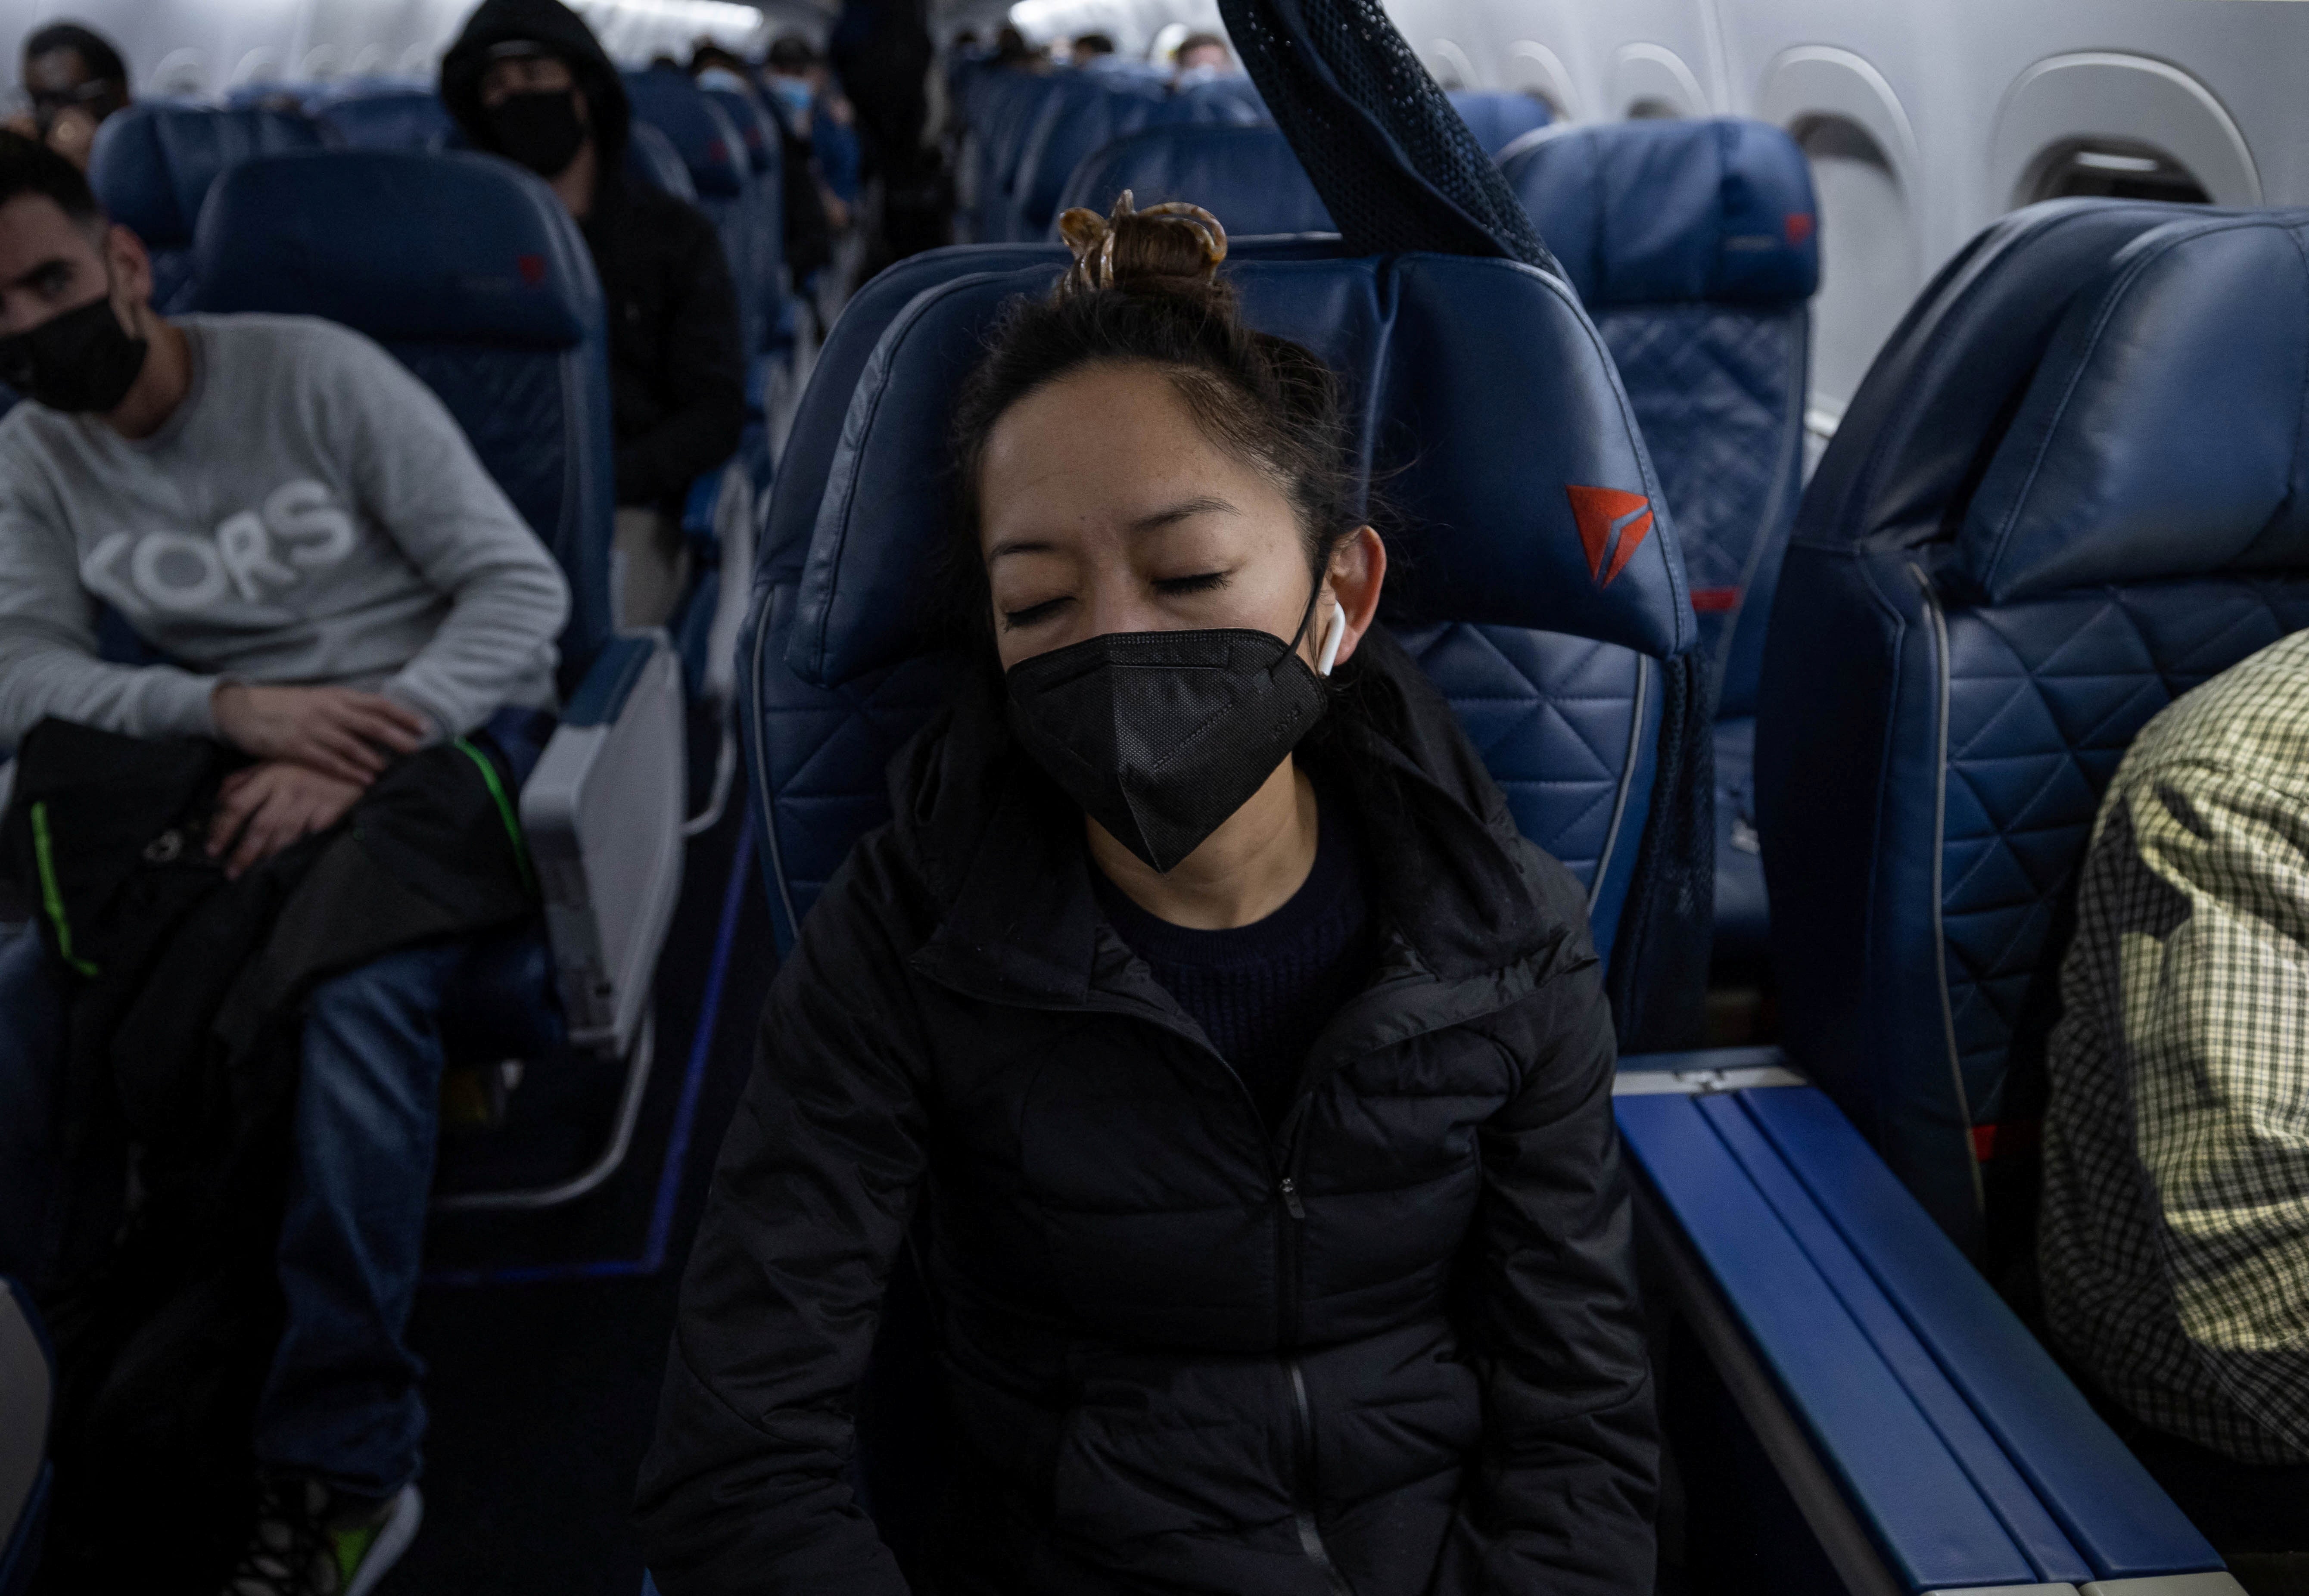 Tien sleeps on her flight from Birmingham, Alabama to Atlanta, Georgia